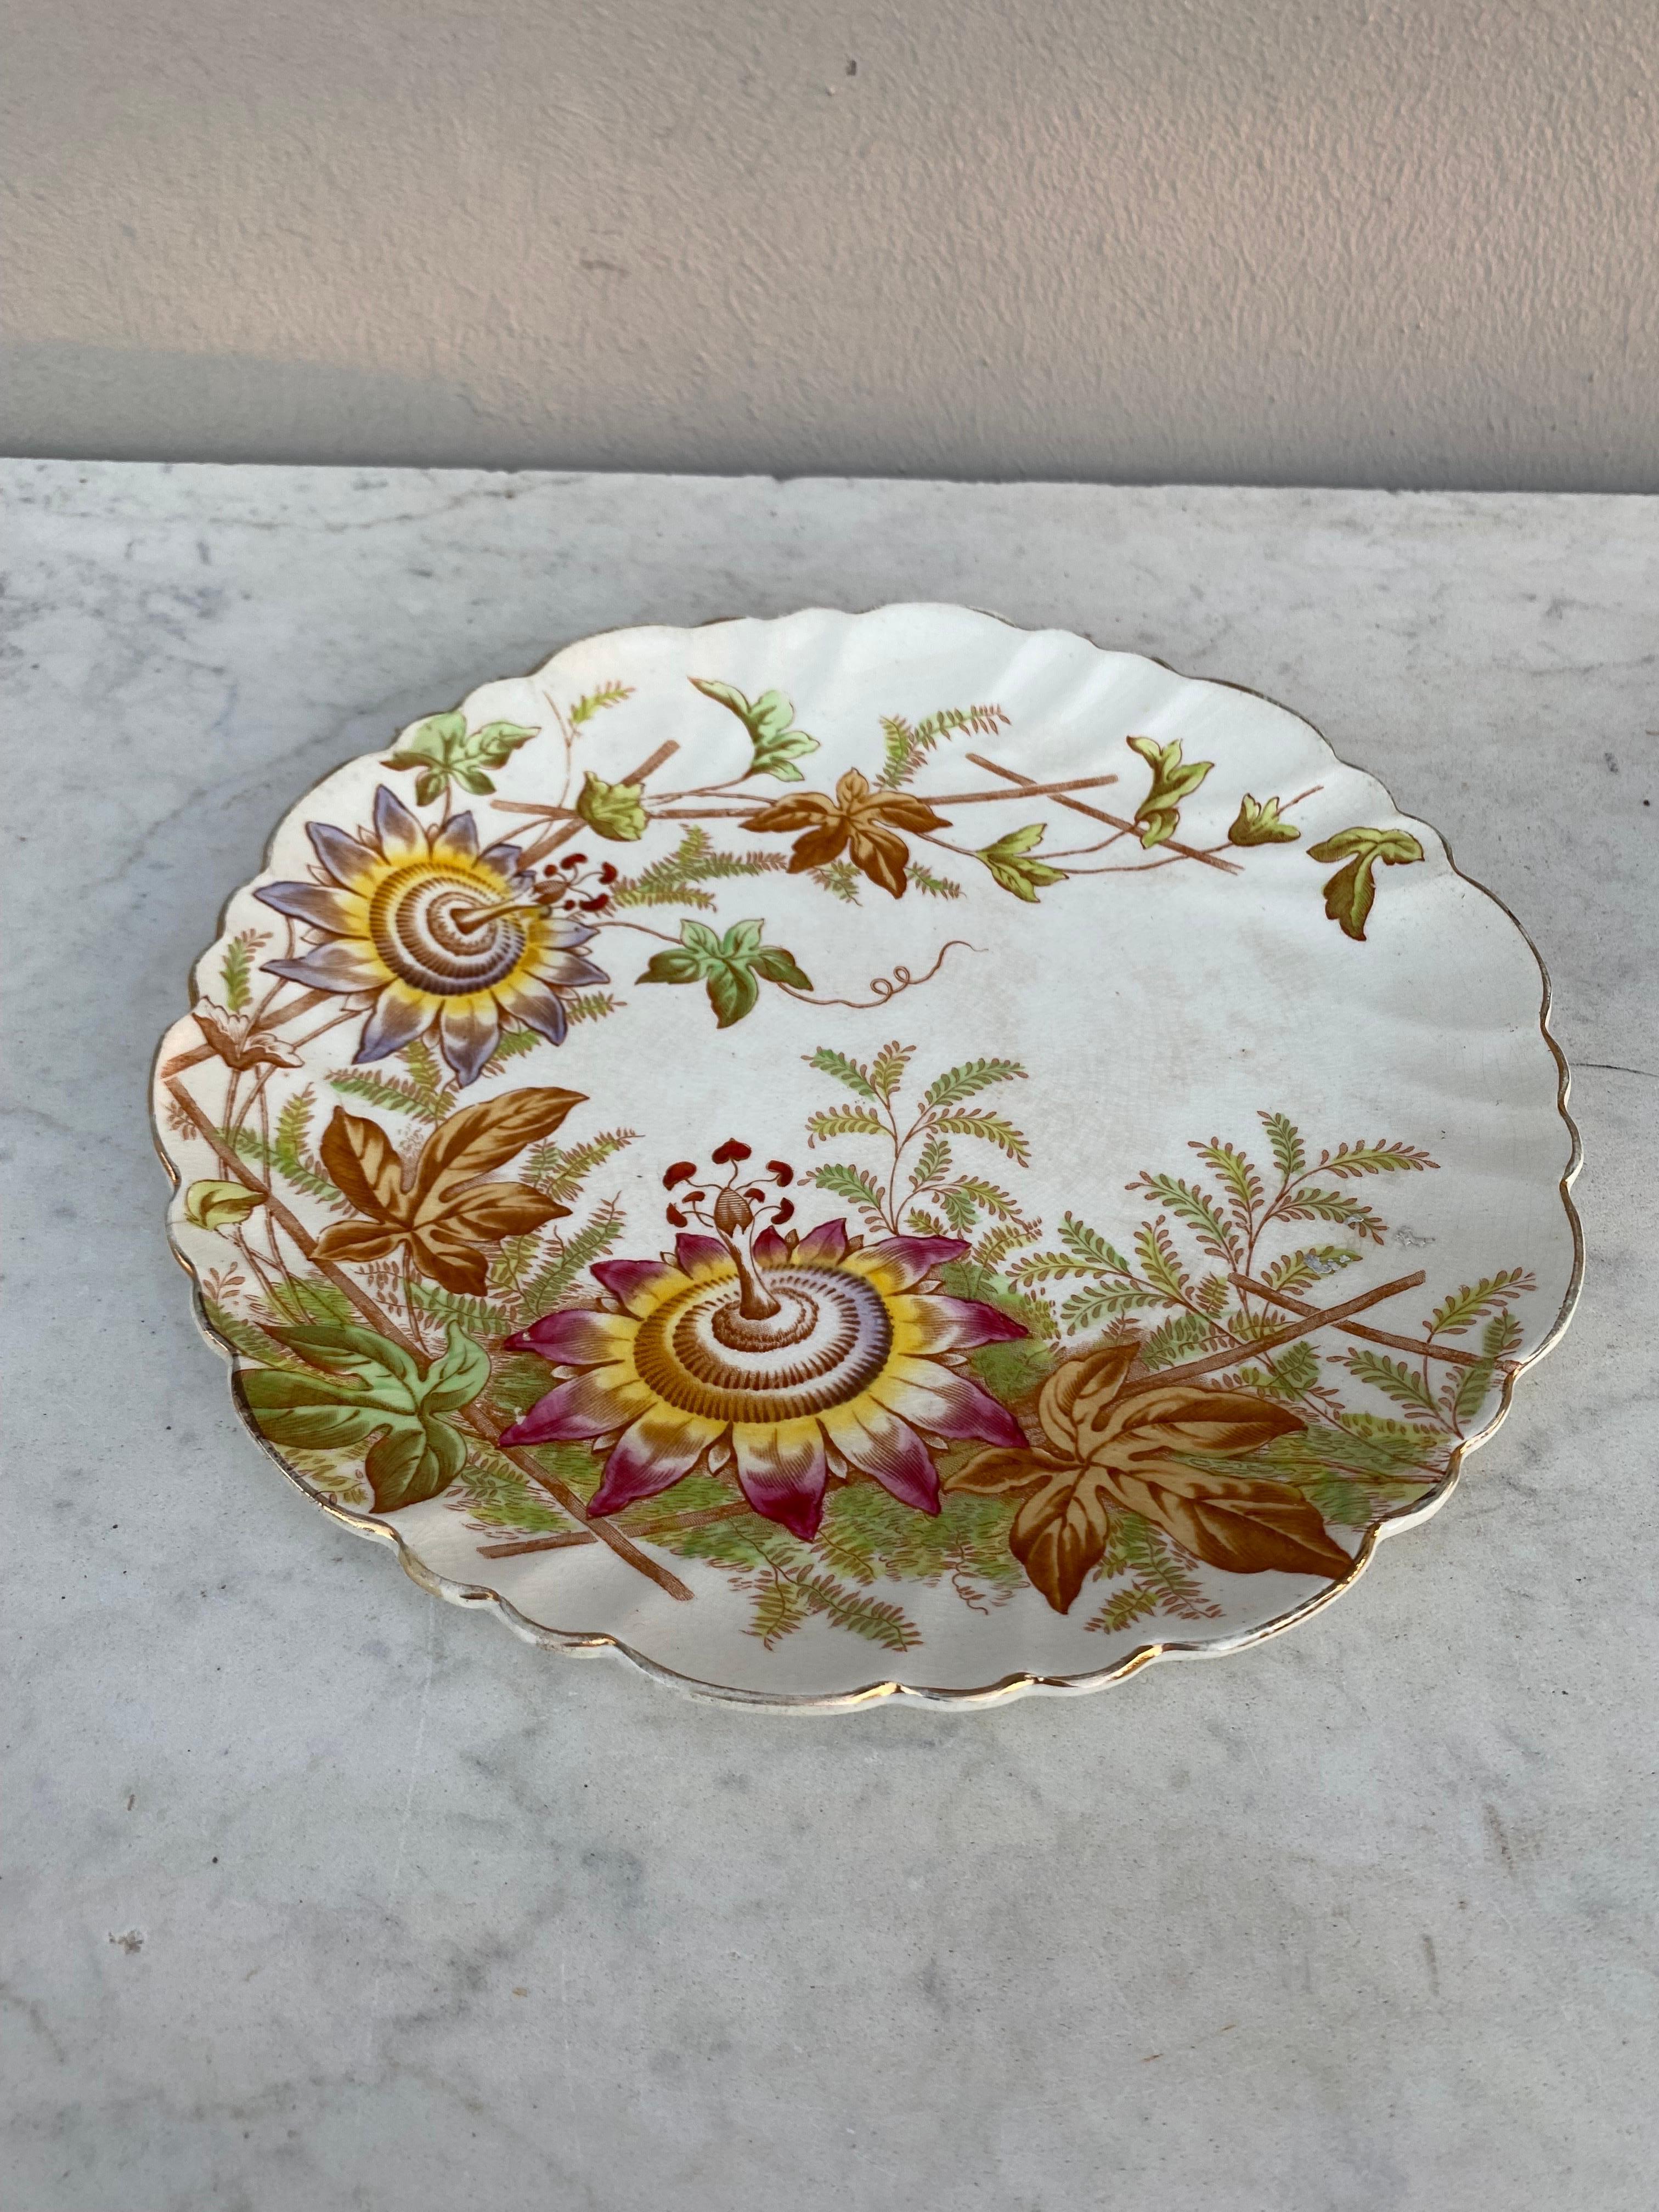 19th century English Passiflora plate.